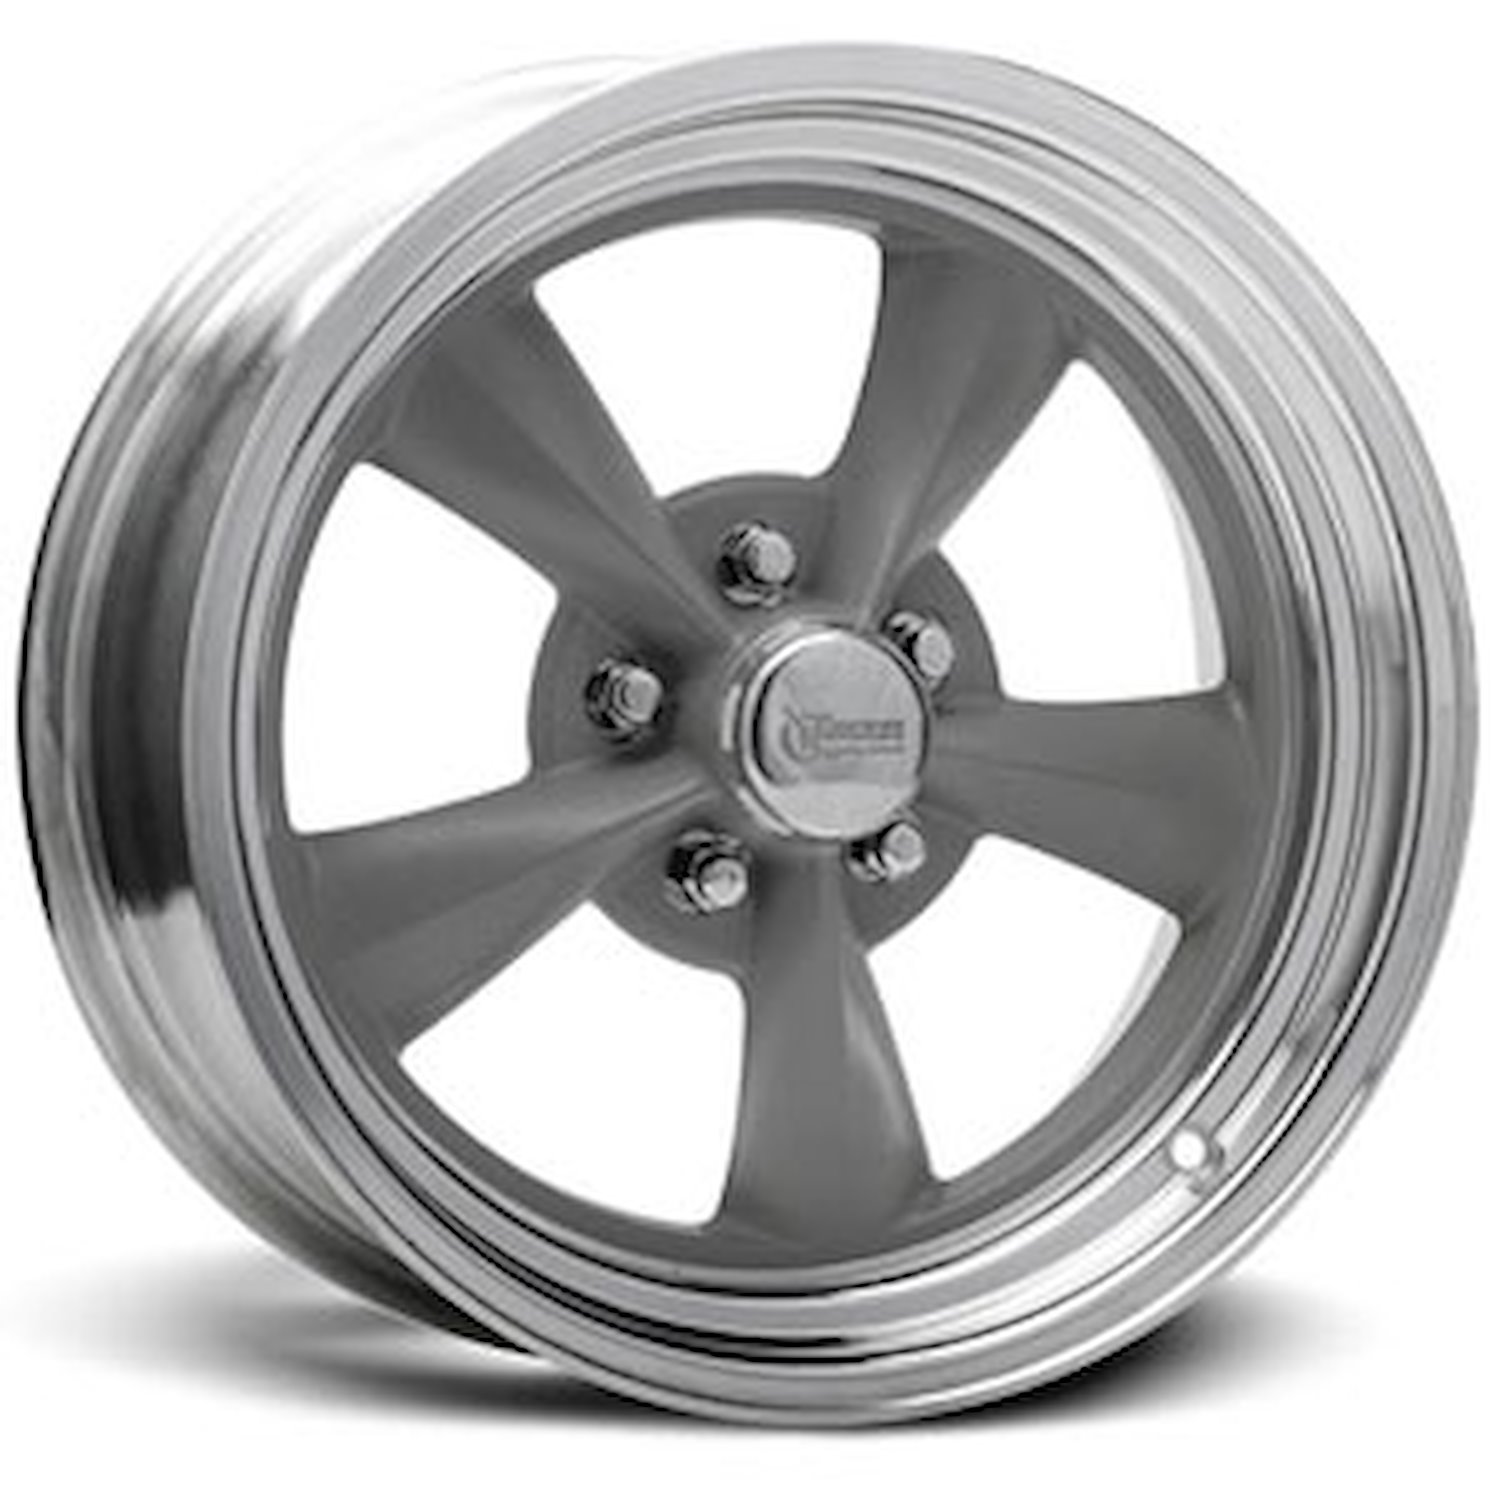 Fuel Wheel - Gray Size: 15" x 8"